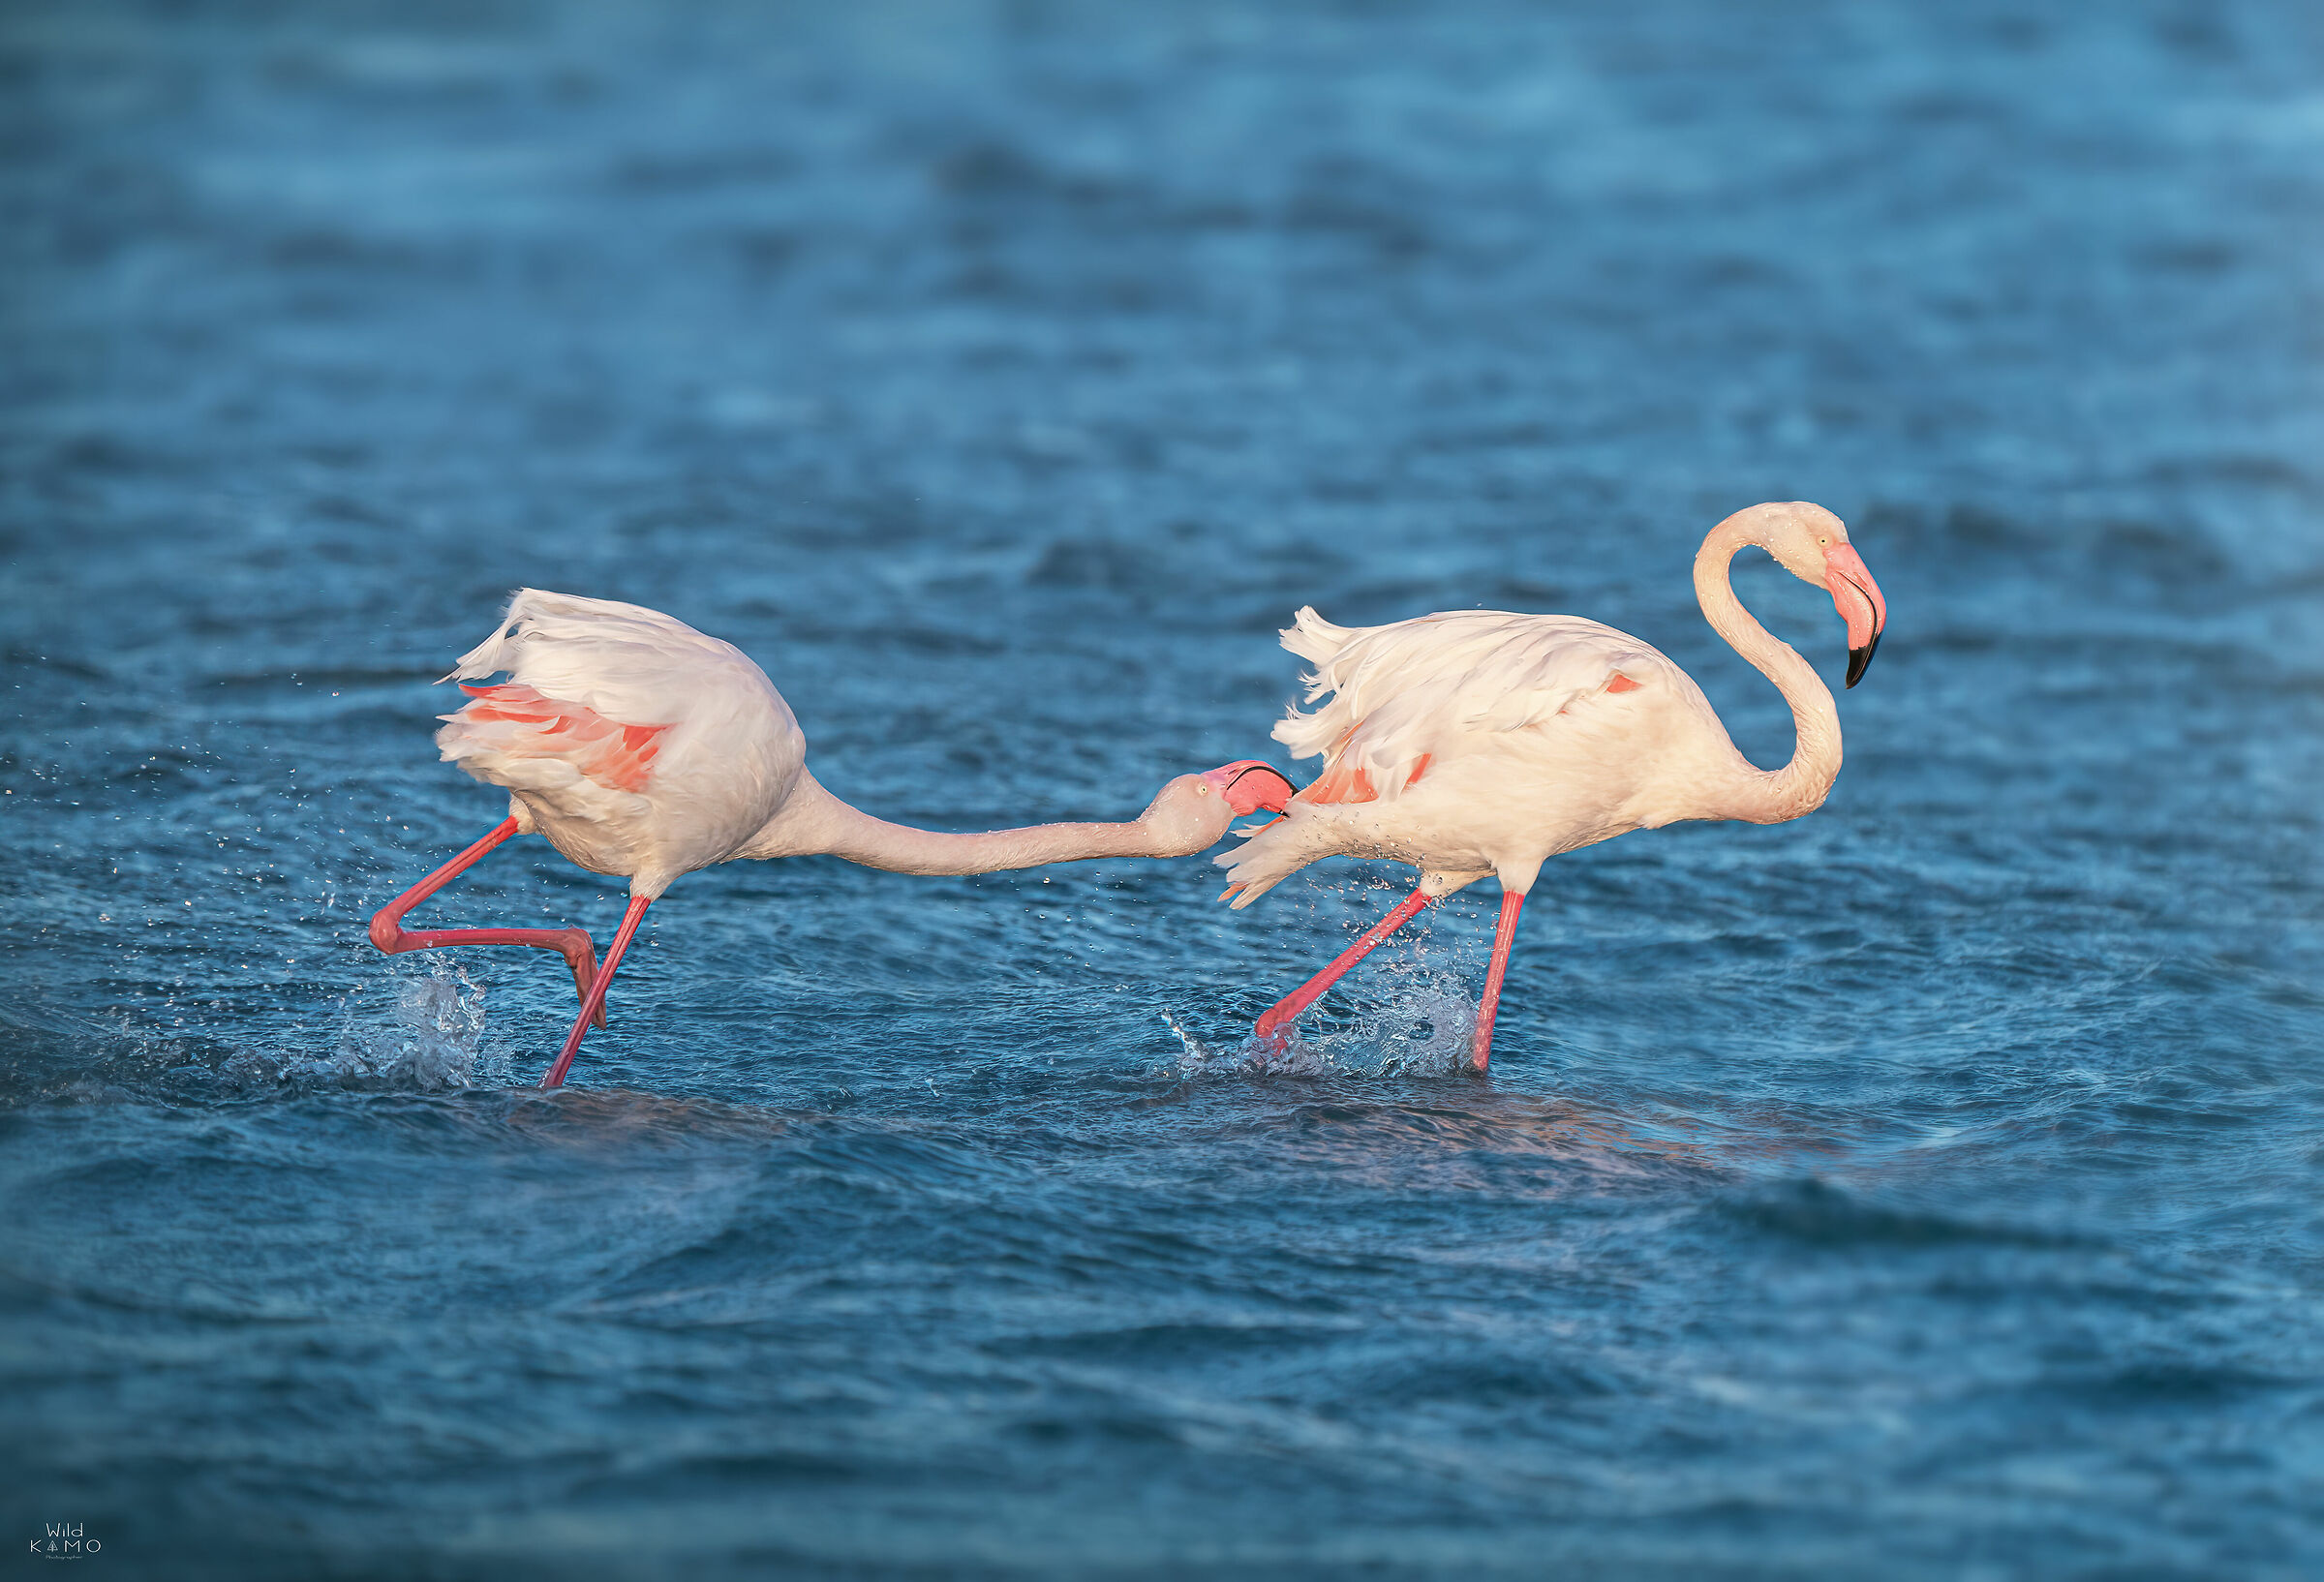 I'll take you skirmishes between Flamingos ...